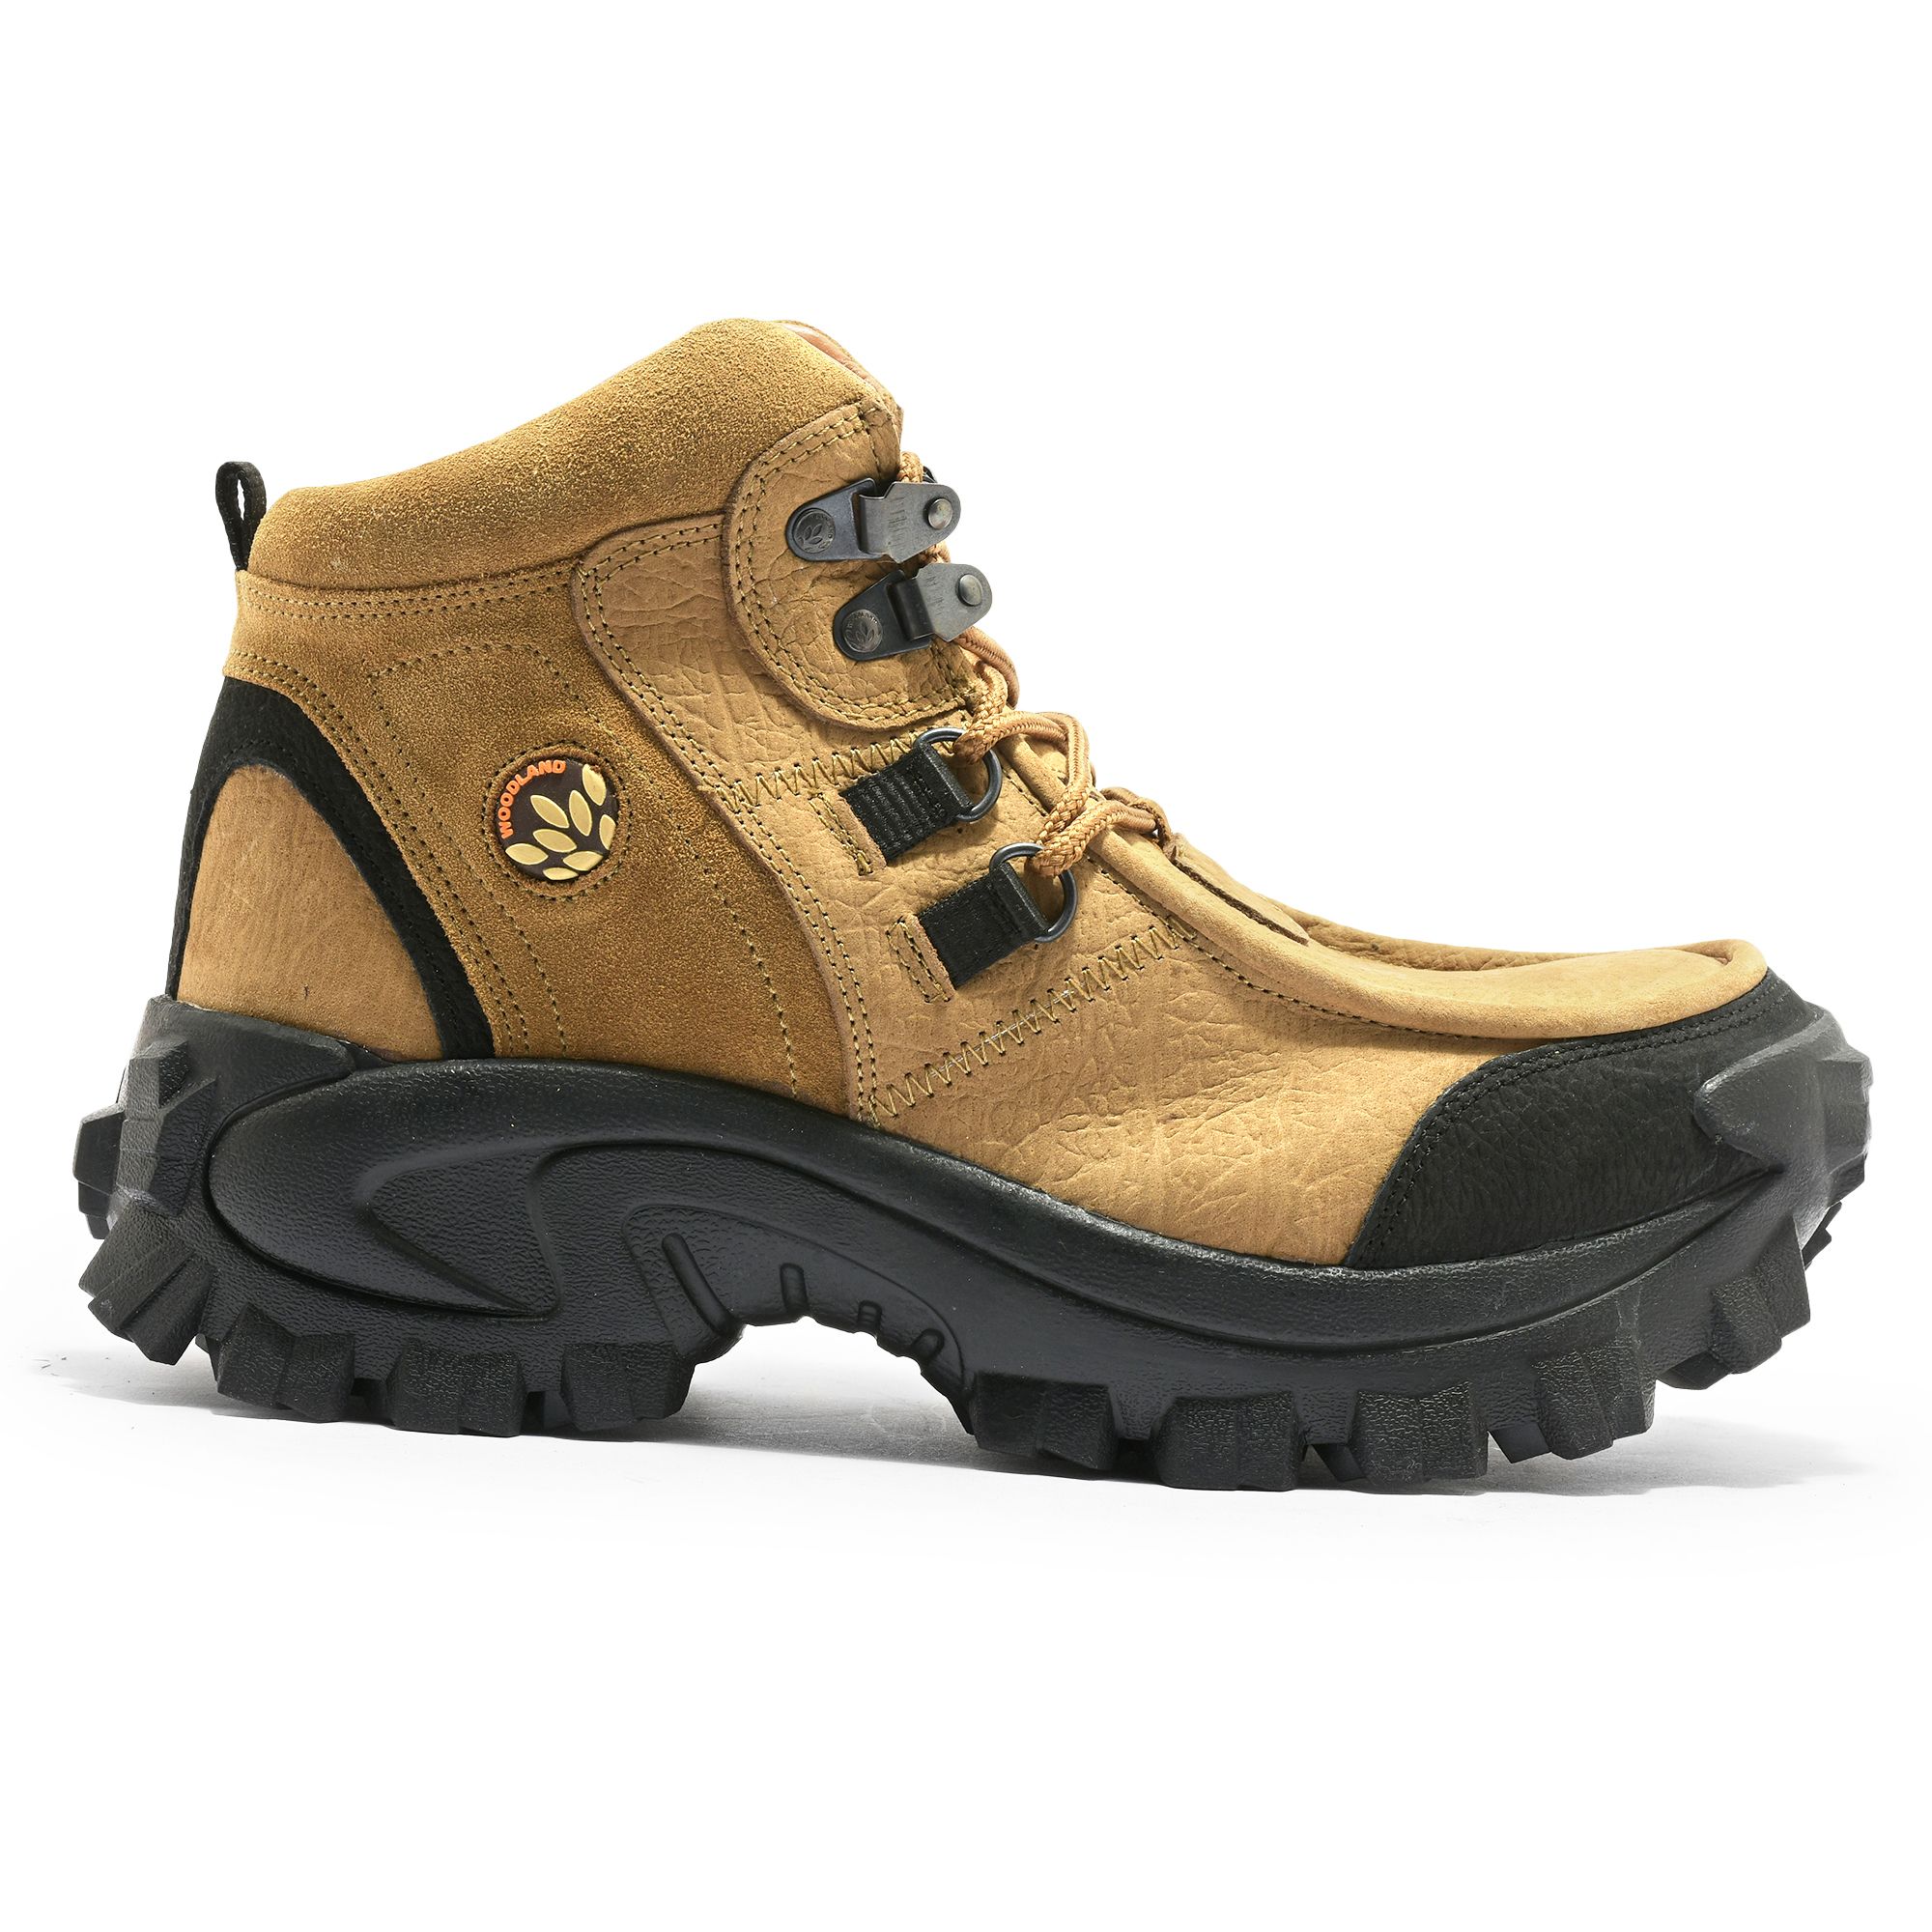 Footwear | Woodland Shoes For Men's | Freeup-saigonsouth.com.vn